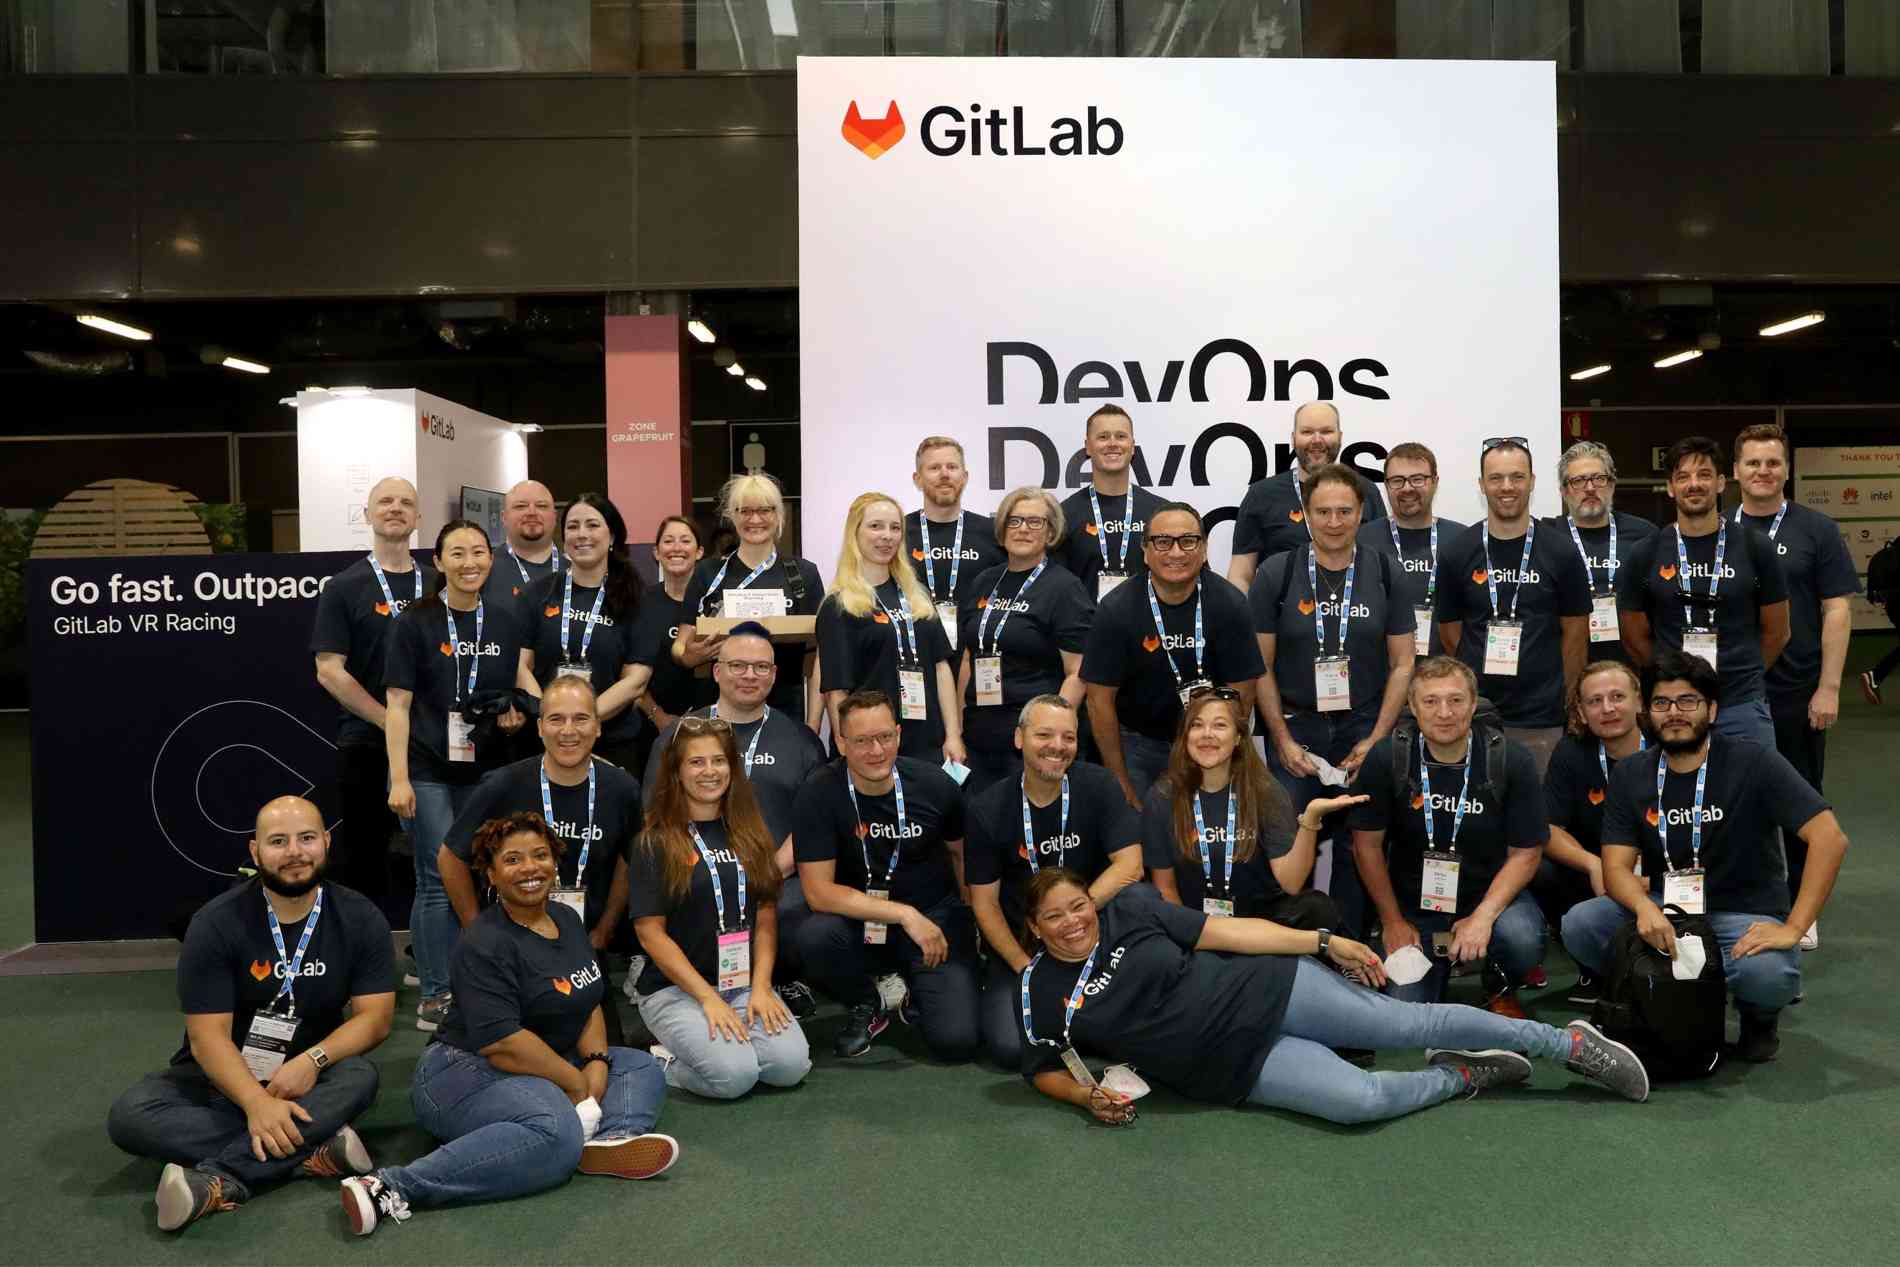 The GitLab team